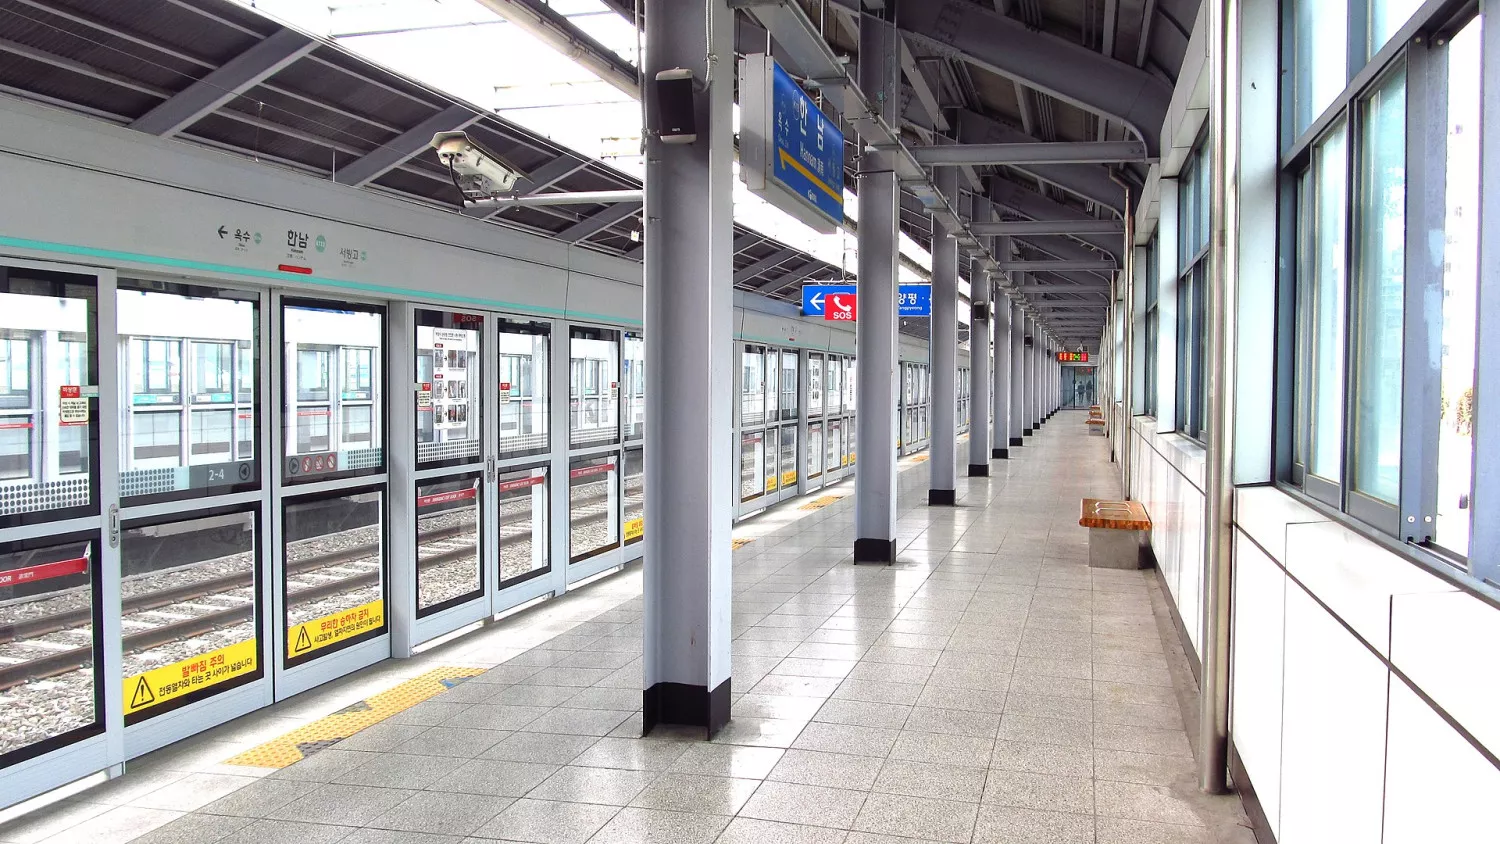 Hannam Metro Station - 한남역 - Seoul - South Korea